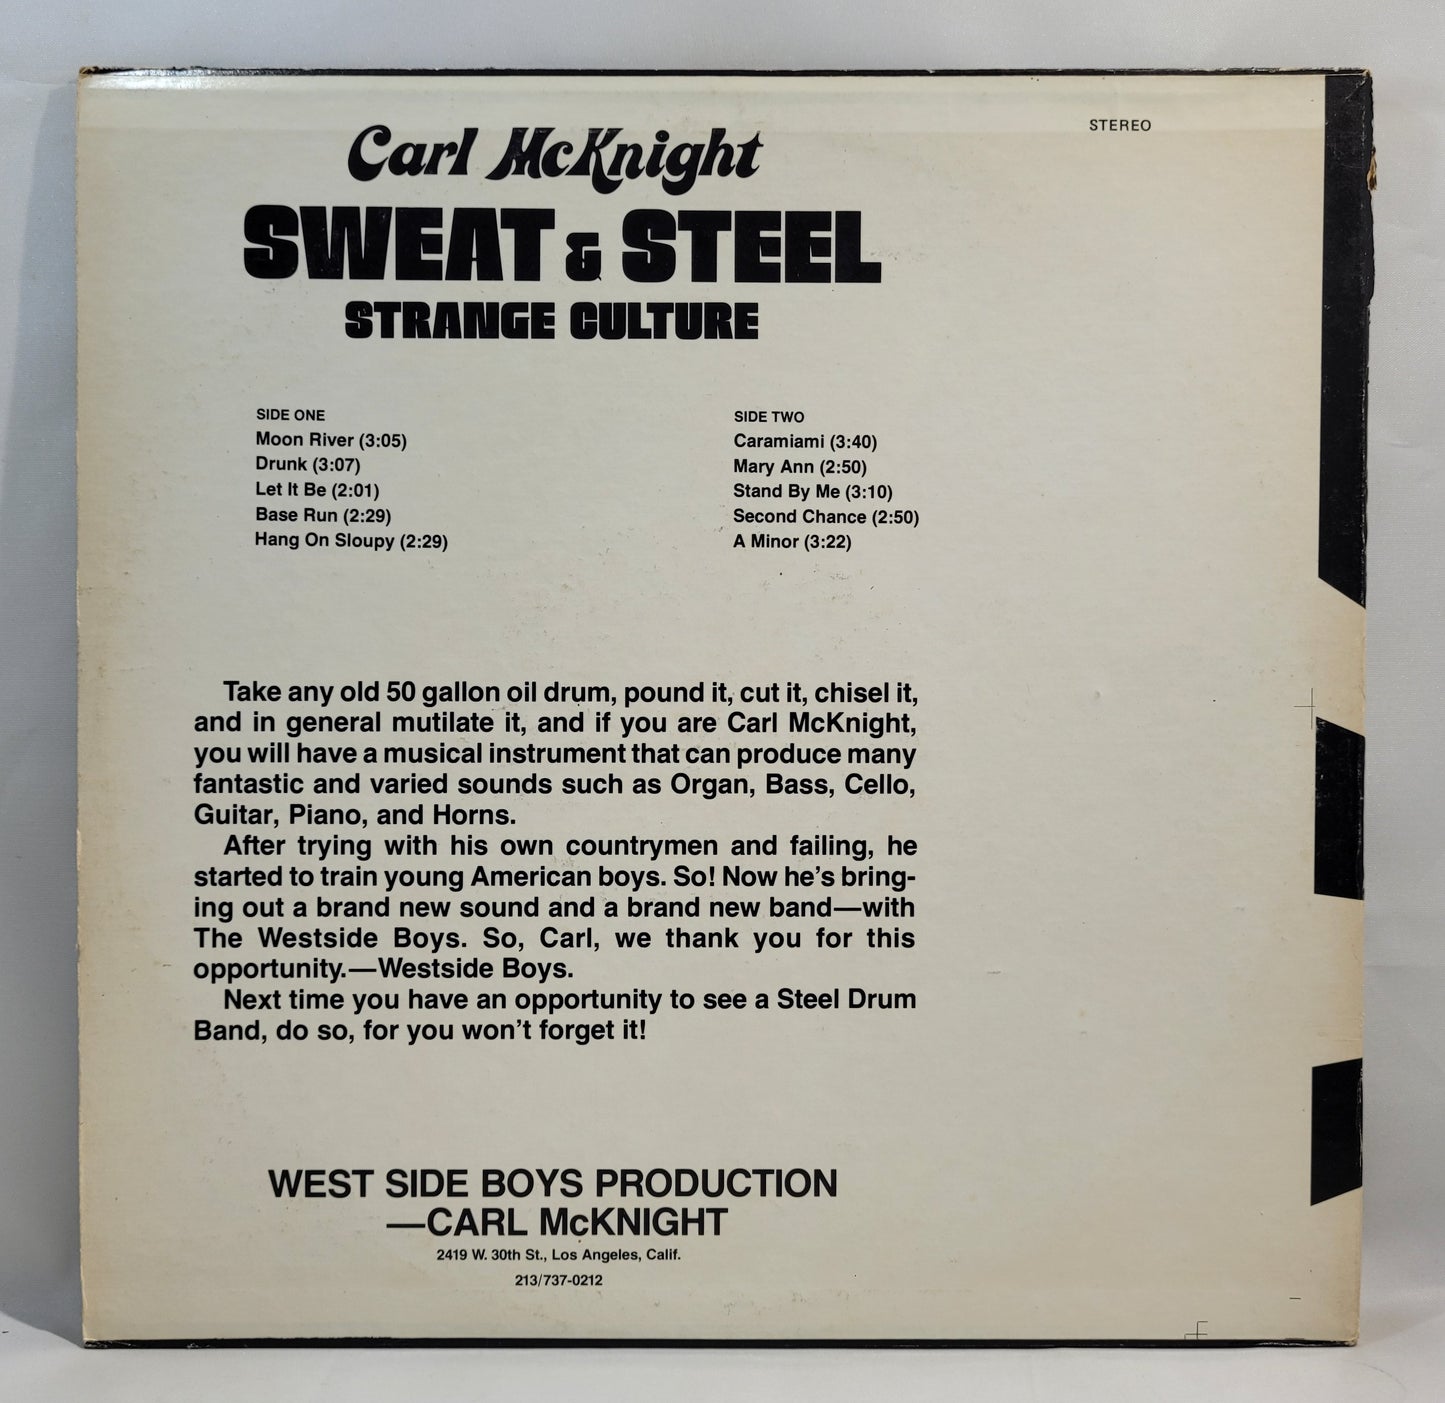 Carl McKnight - Sweat and Steel Strange Culture [Vinyl Record LP]